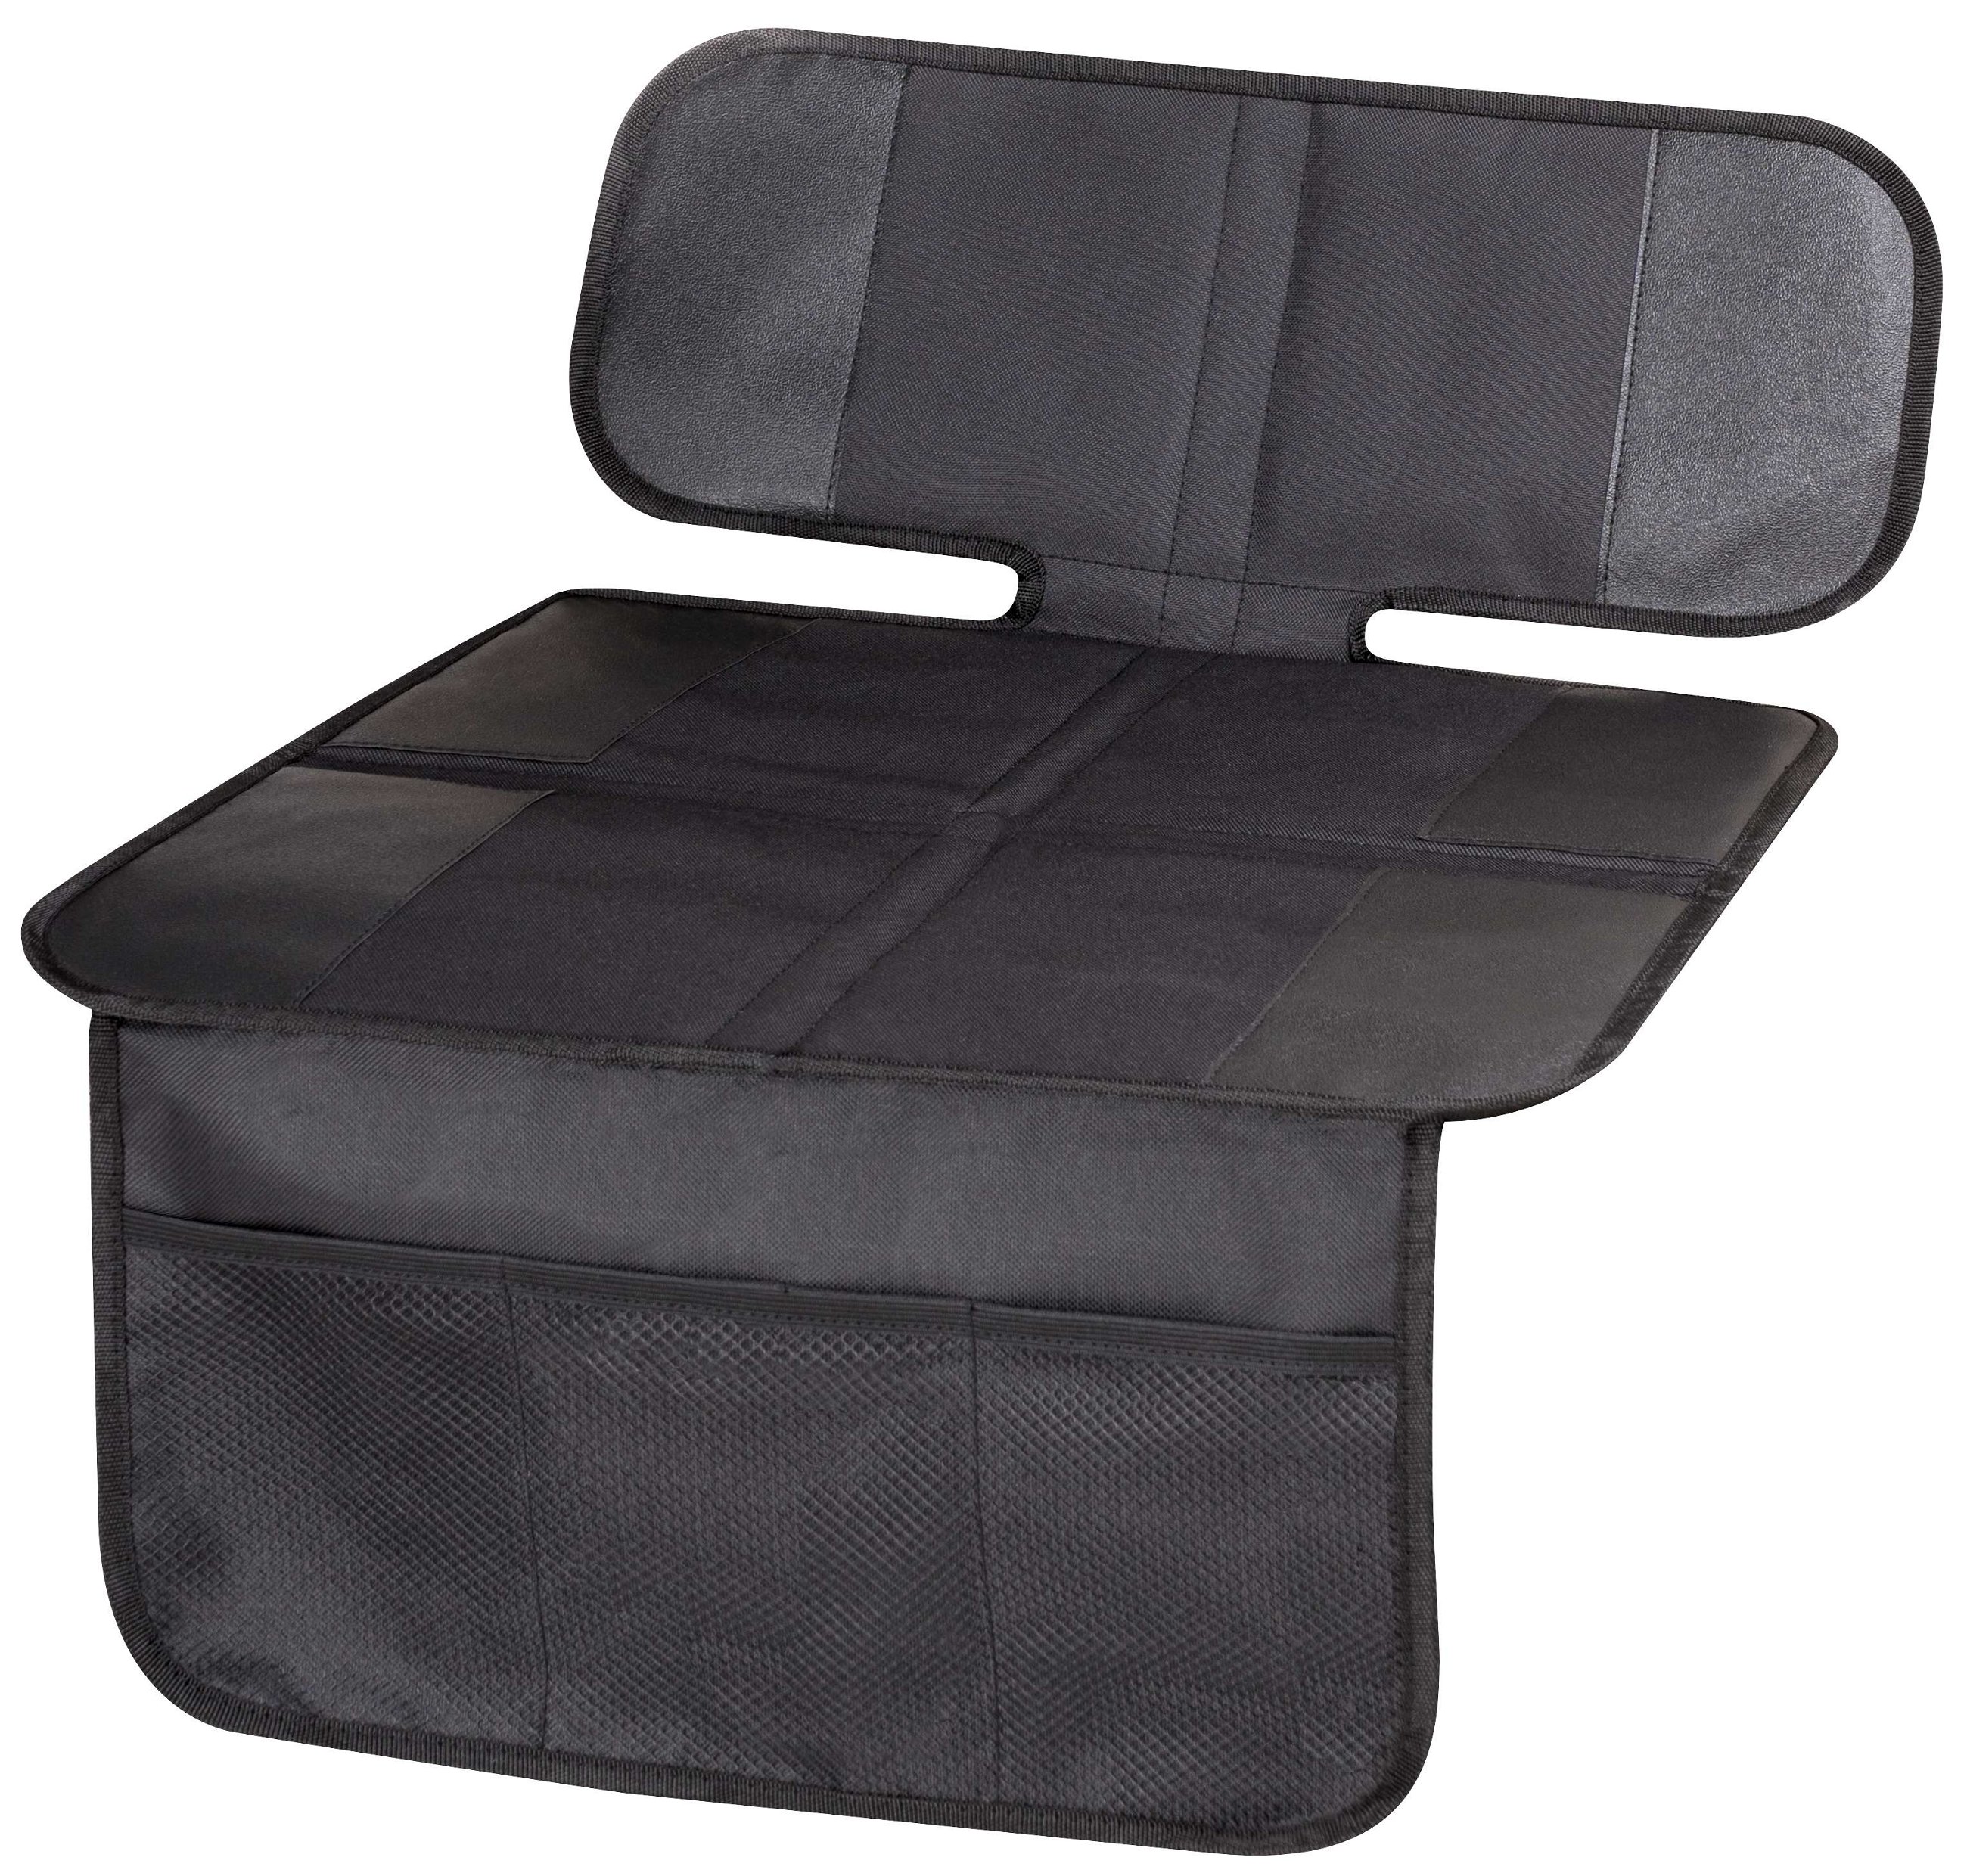 Child seat pad for car rear seat George Premium